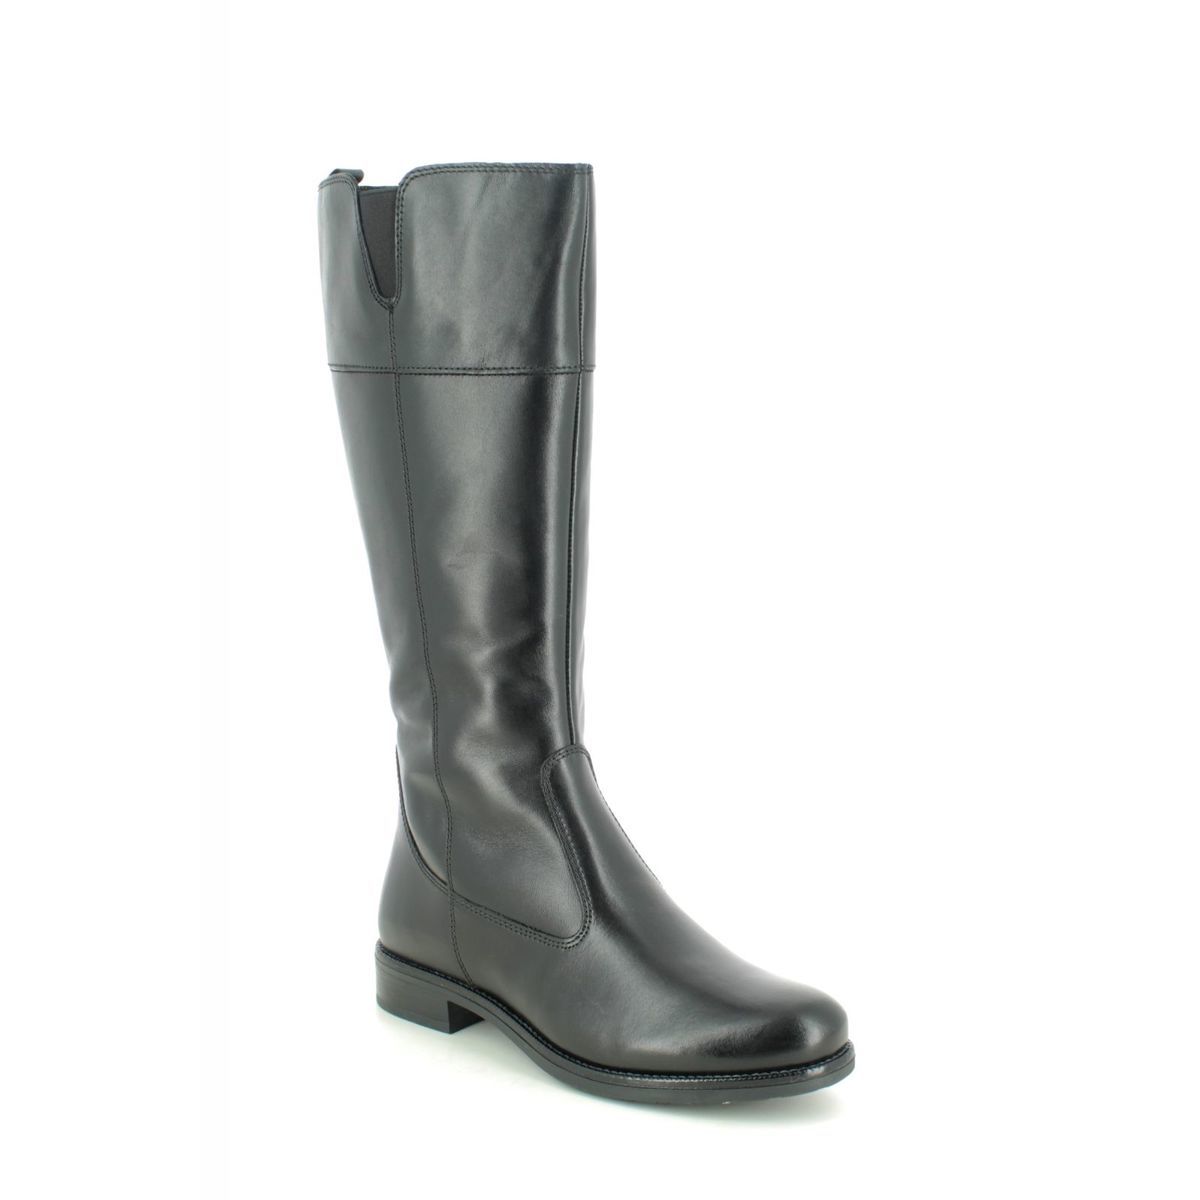 Tamaris Cari Wide Calf 25582-25-001 Black leather knee-high boots